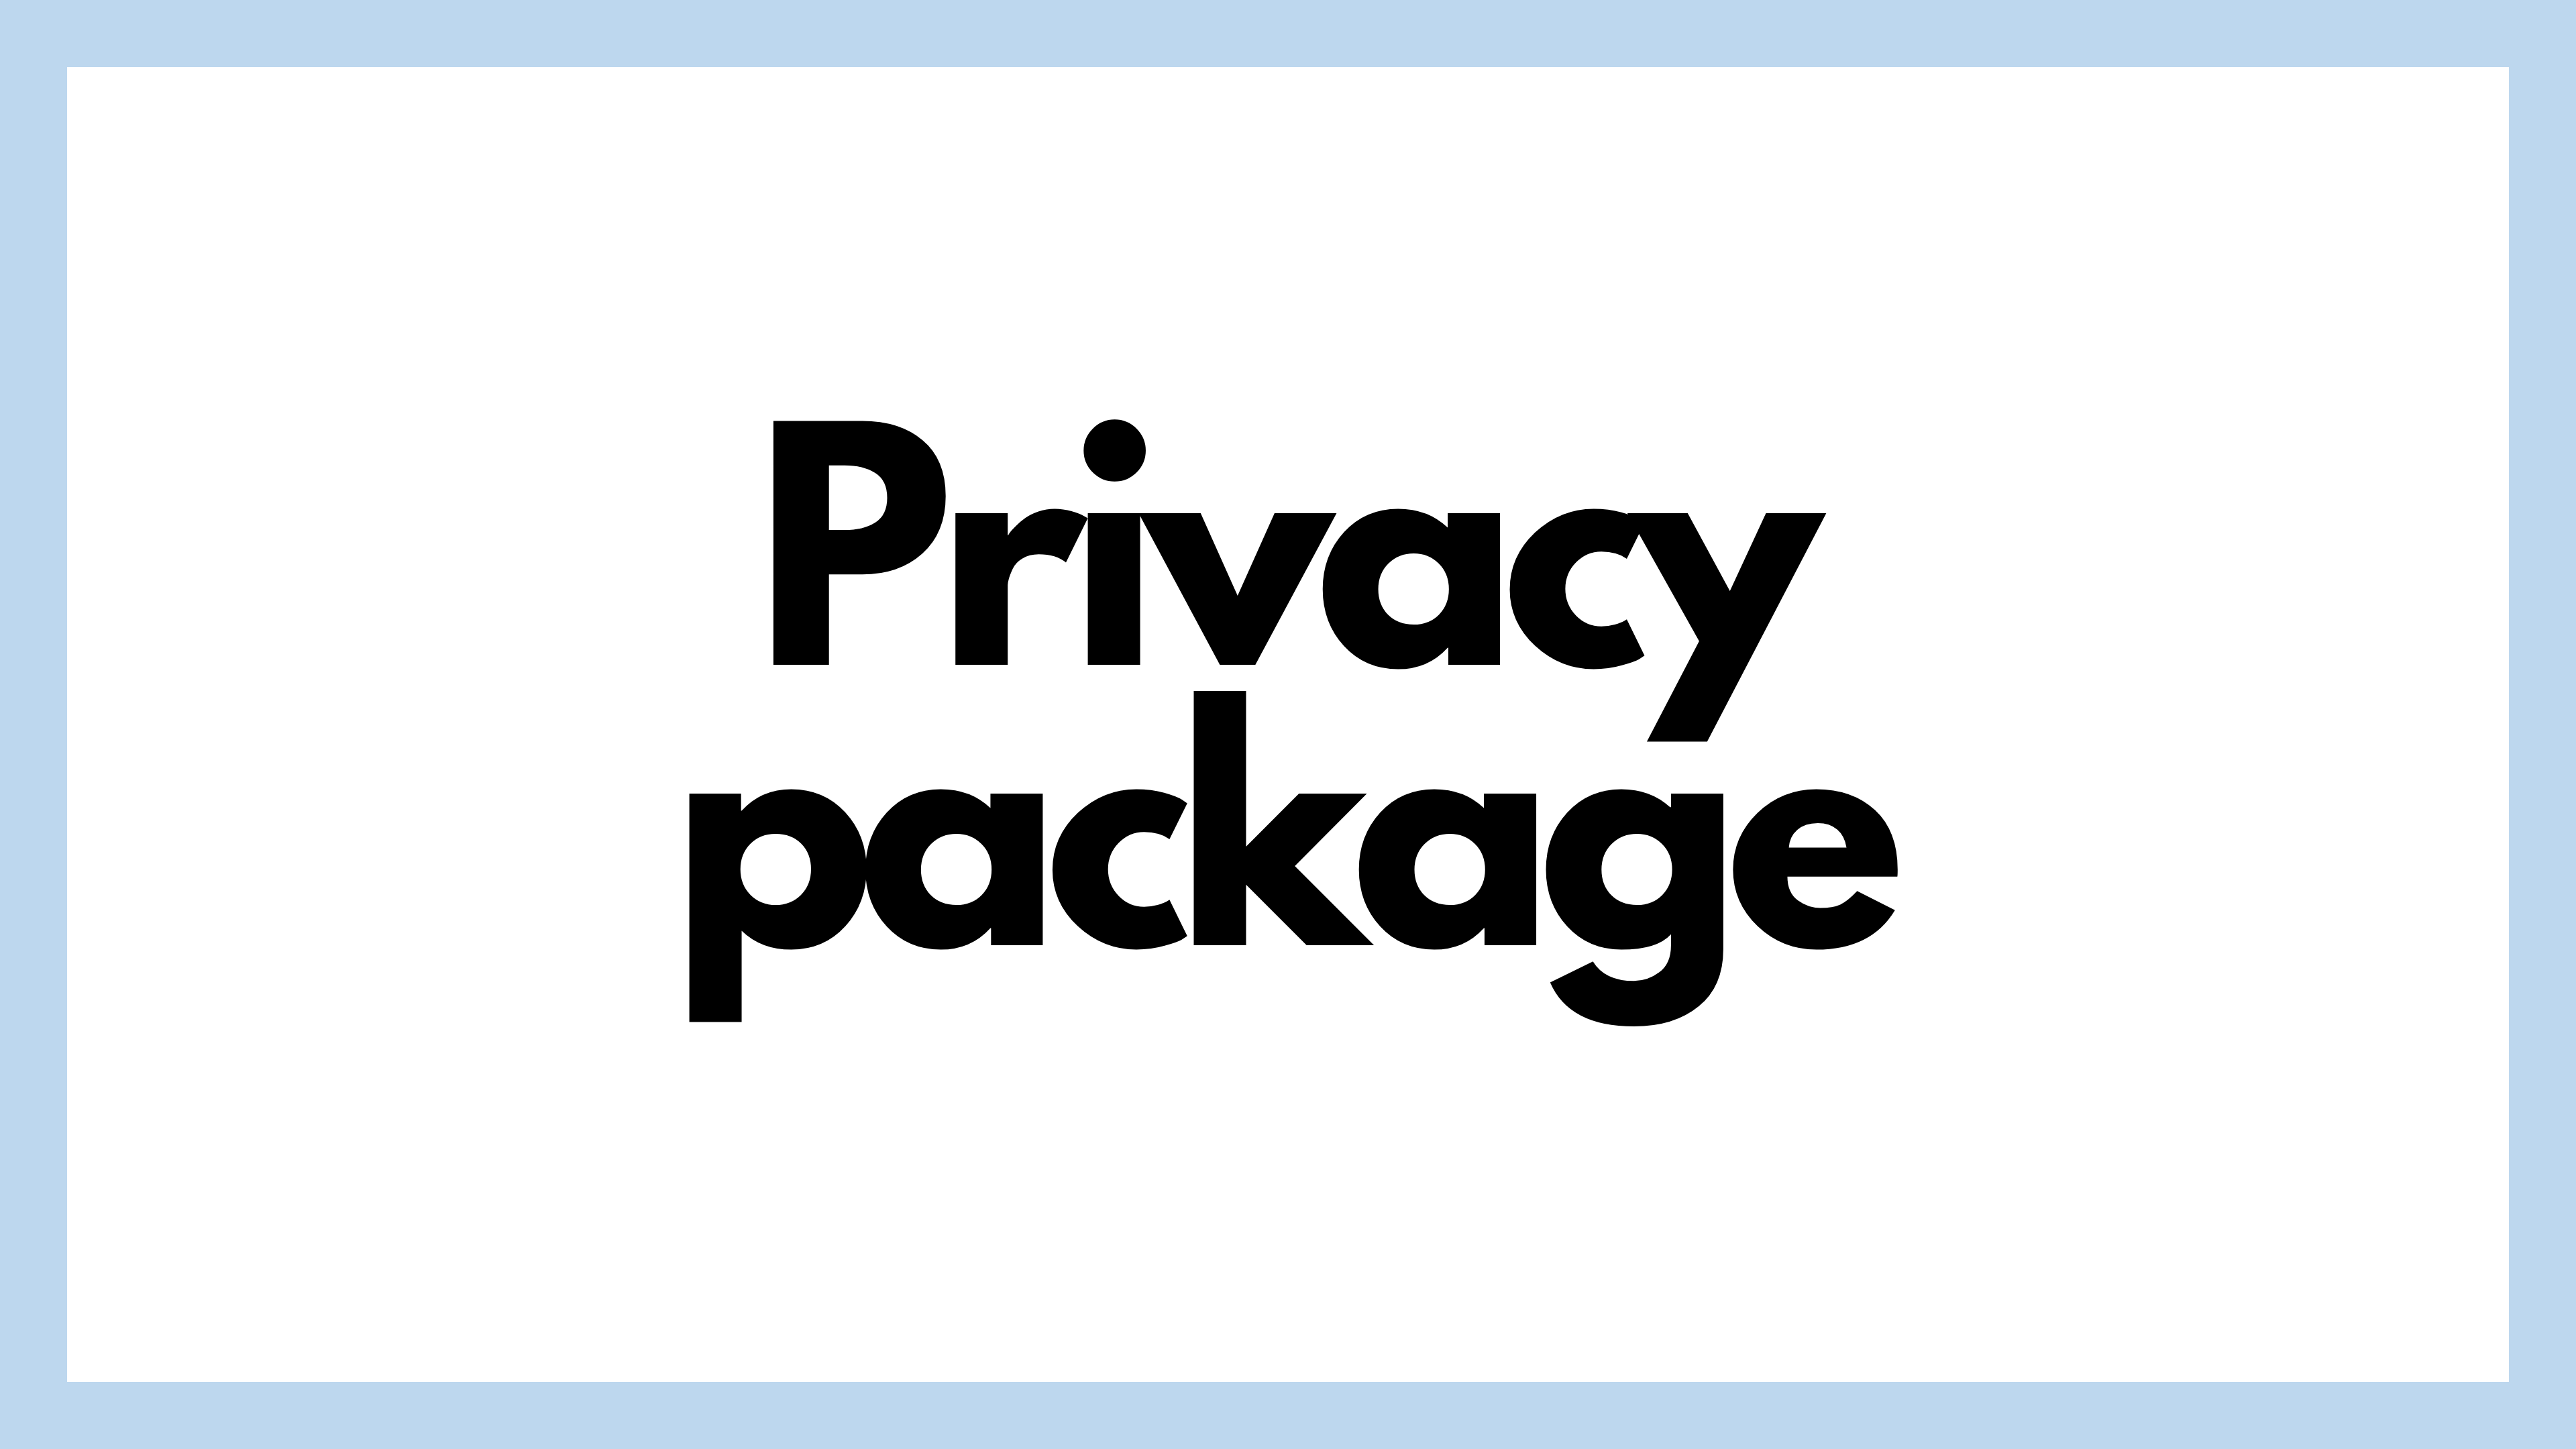 Privacy packagr